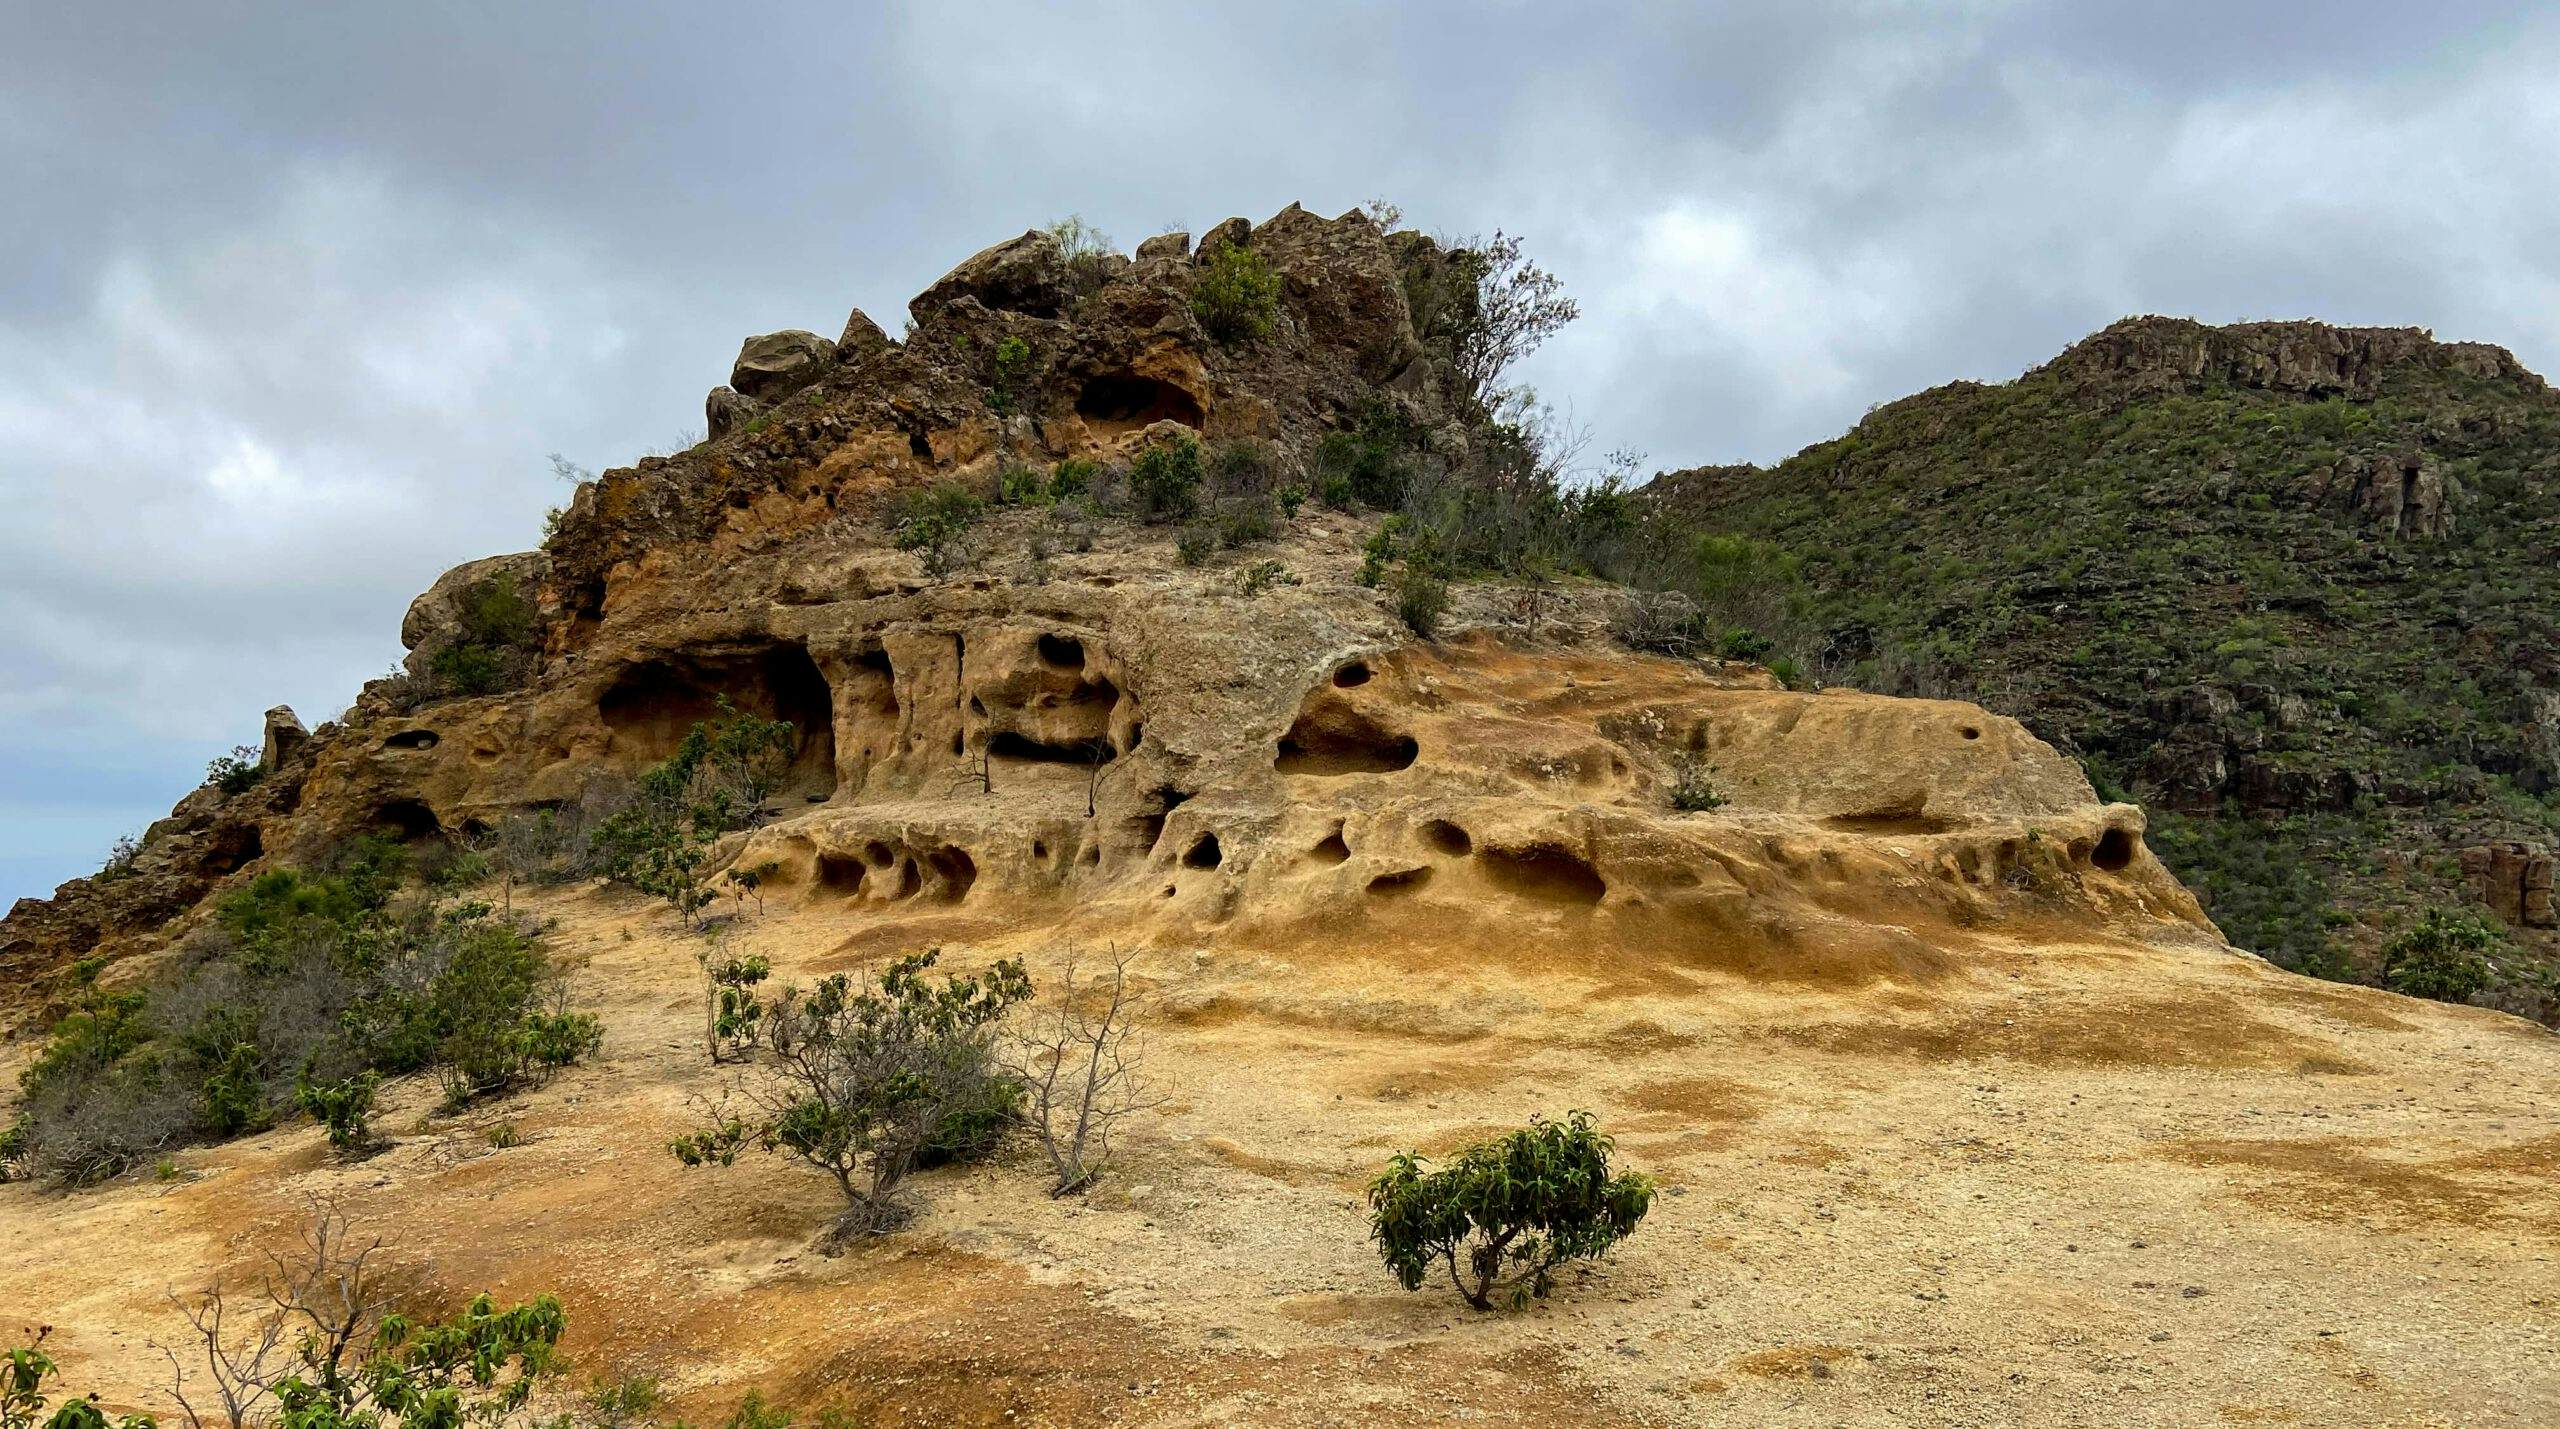 Plateau mit interessanten Ausformungen - Wanderkreuzung Adeje und Weg zu den Höhlen